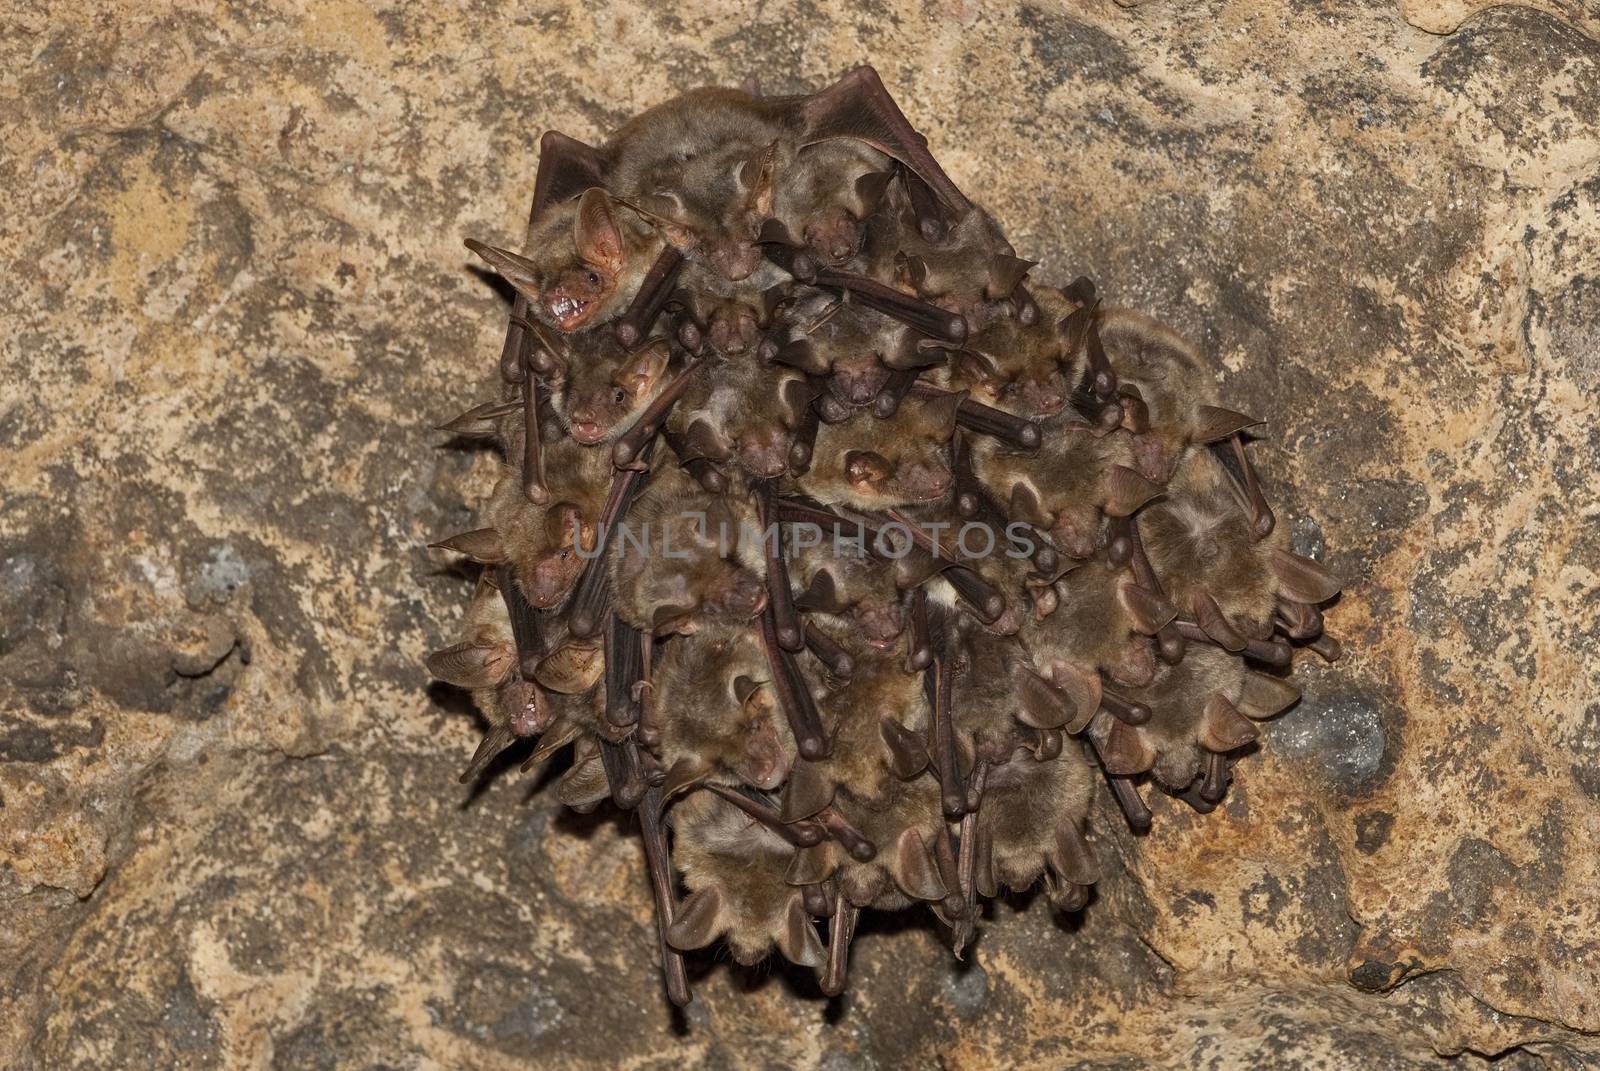 Groups of sleeping bats in cave, Myotis myotis by jalonsohu@gmail.com